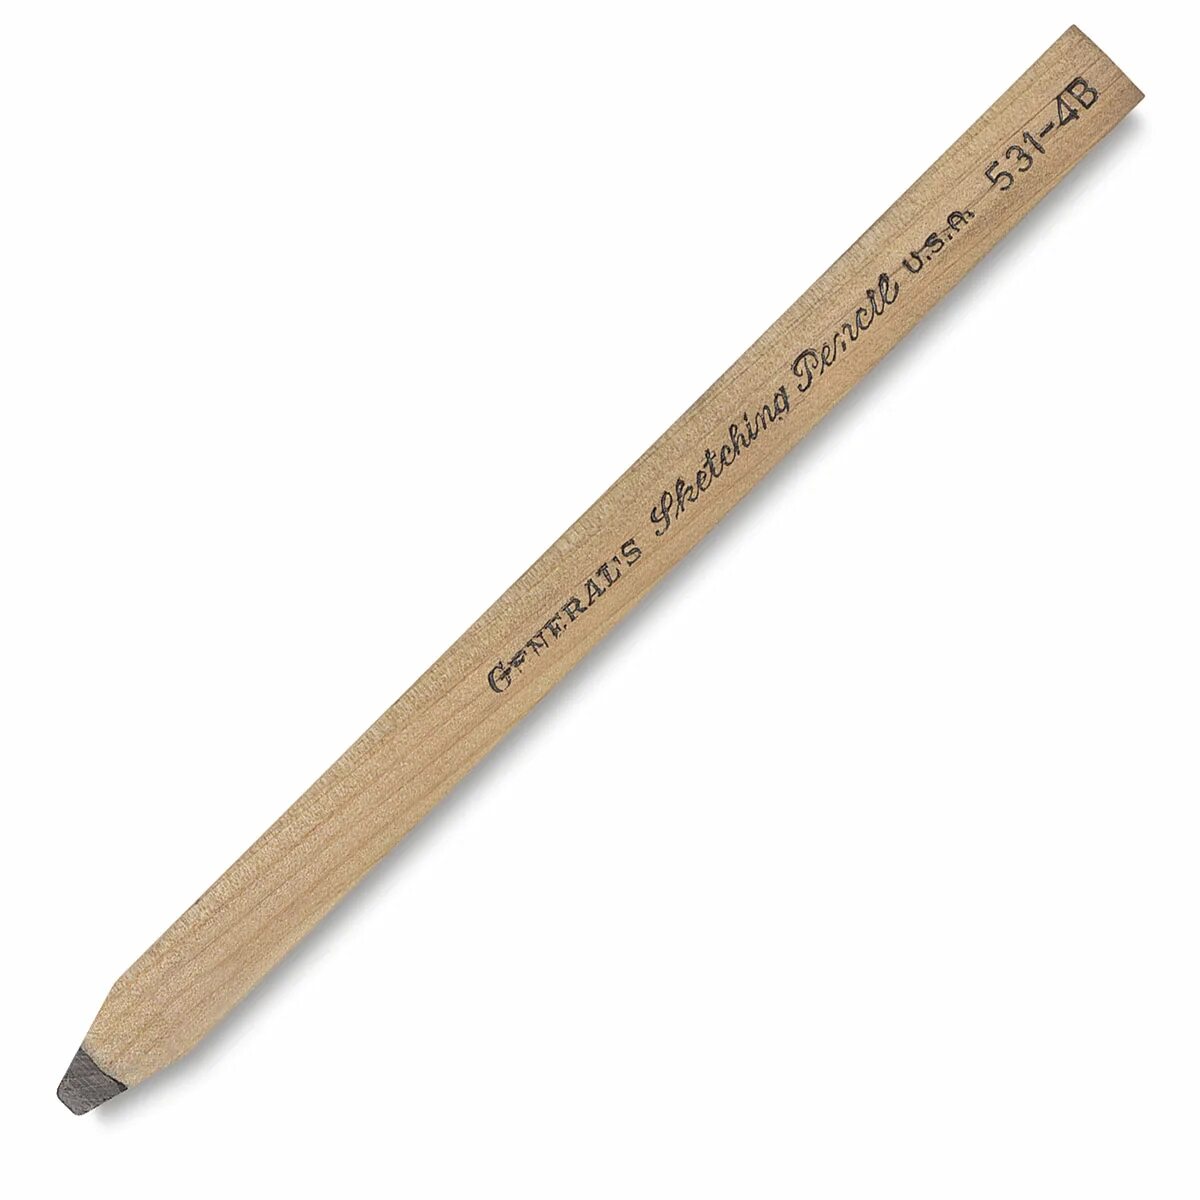 Плоский карандаш. Плоский карандаш для рисования. Карандаш плоский строительный. Столярный карандаш. Pencil b